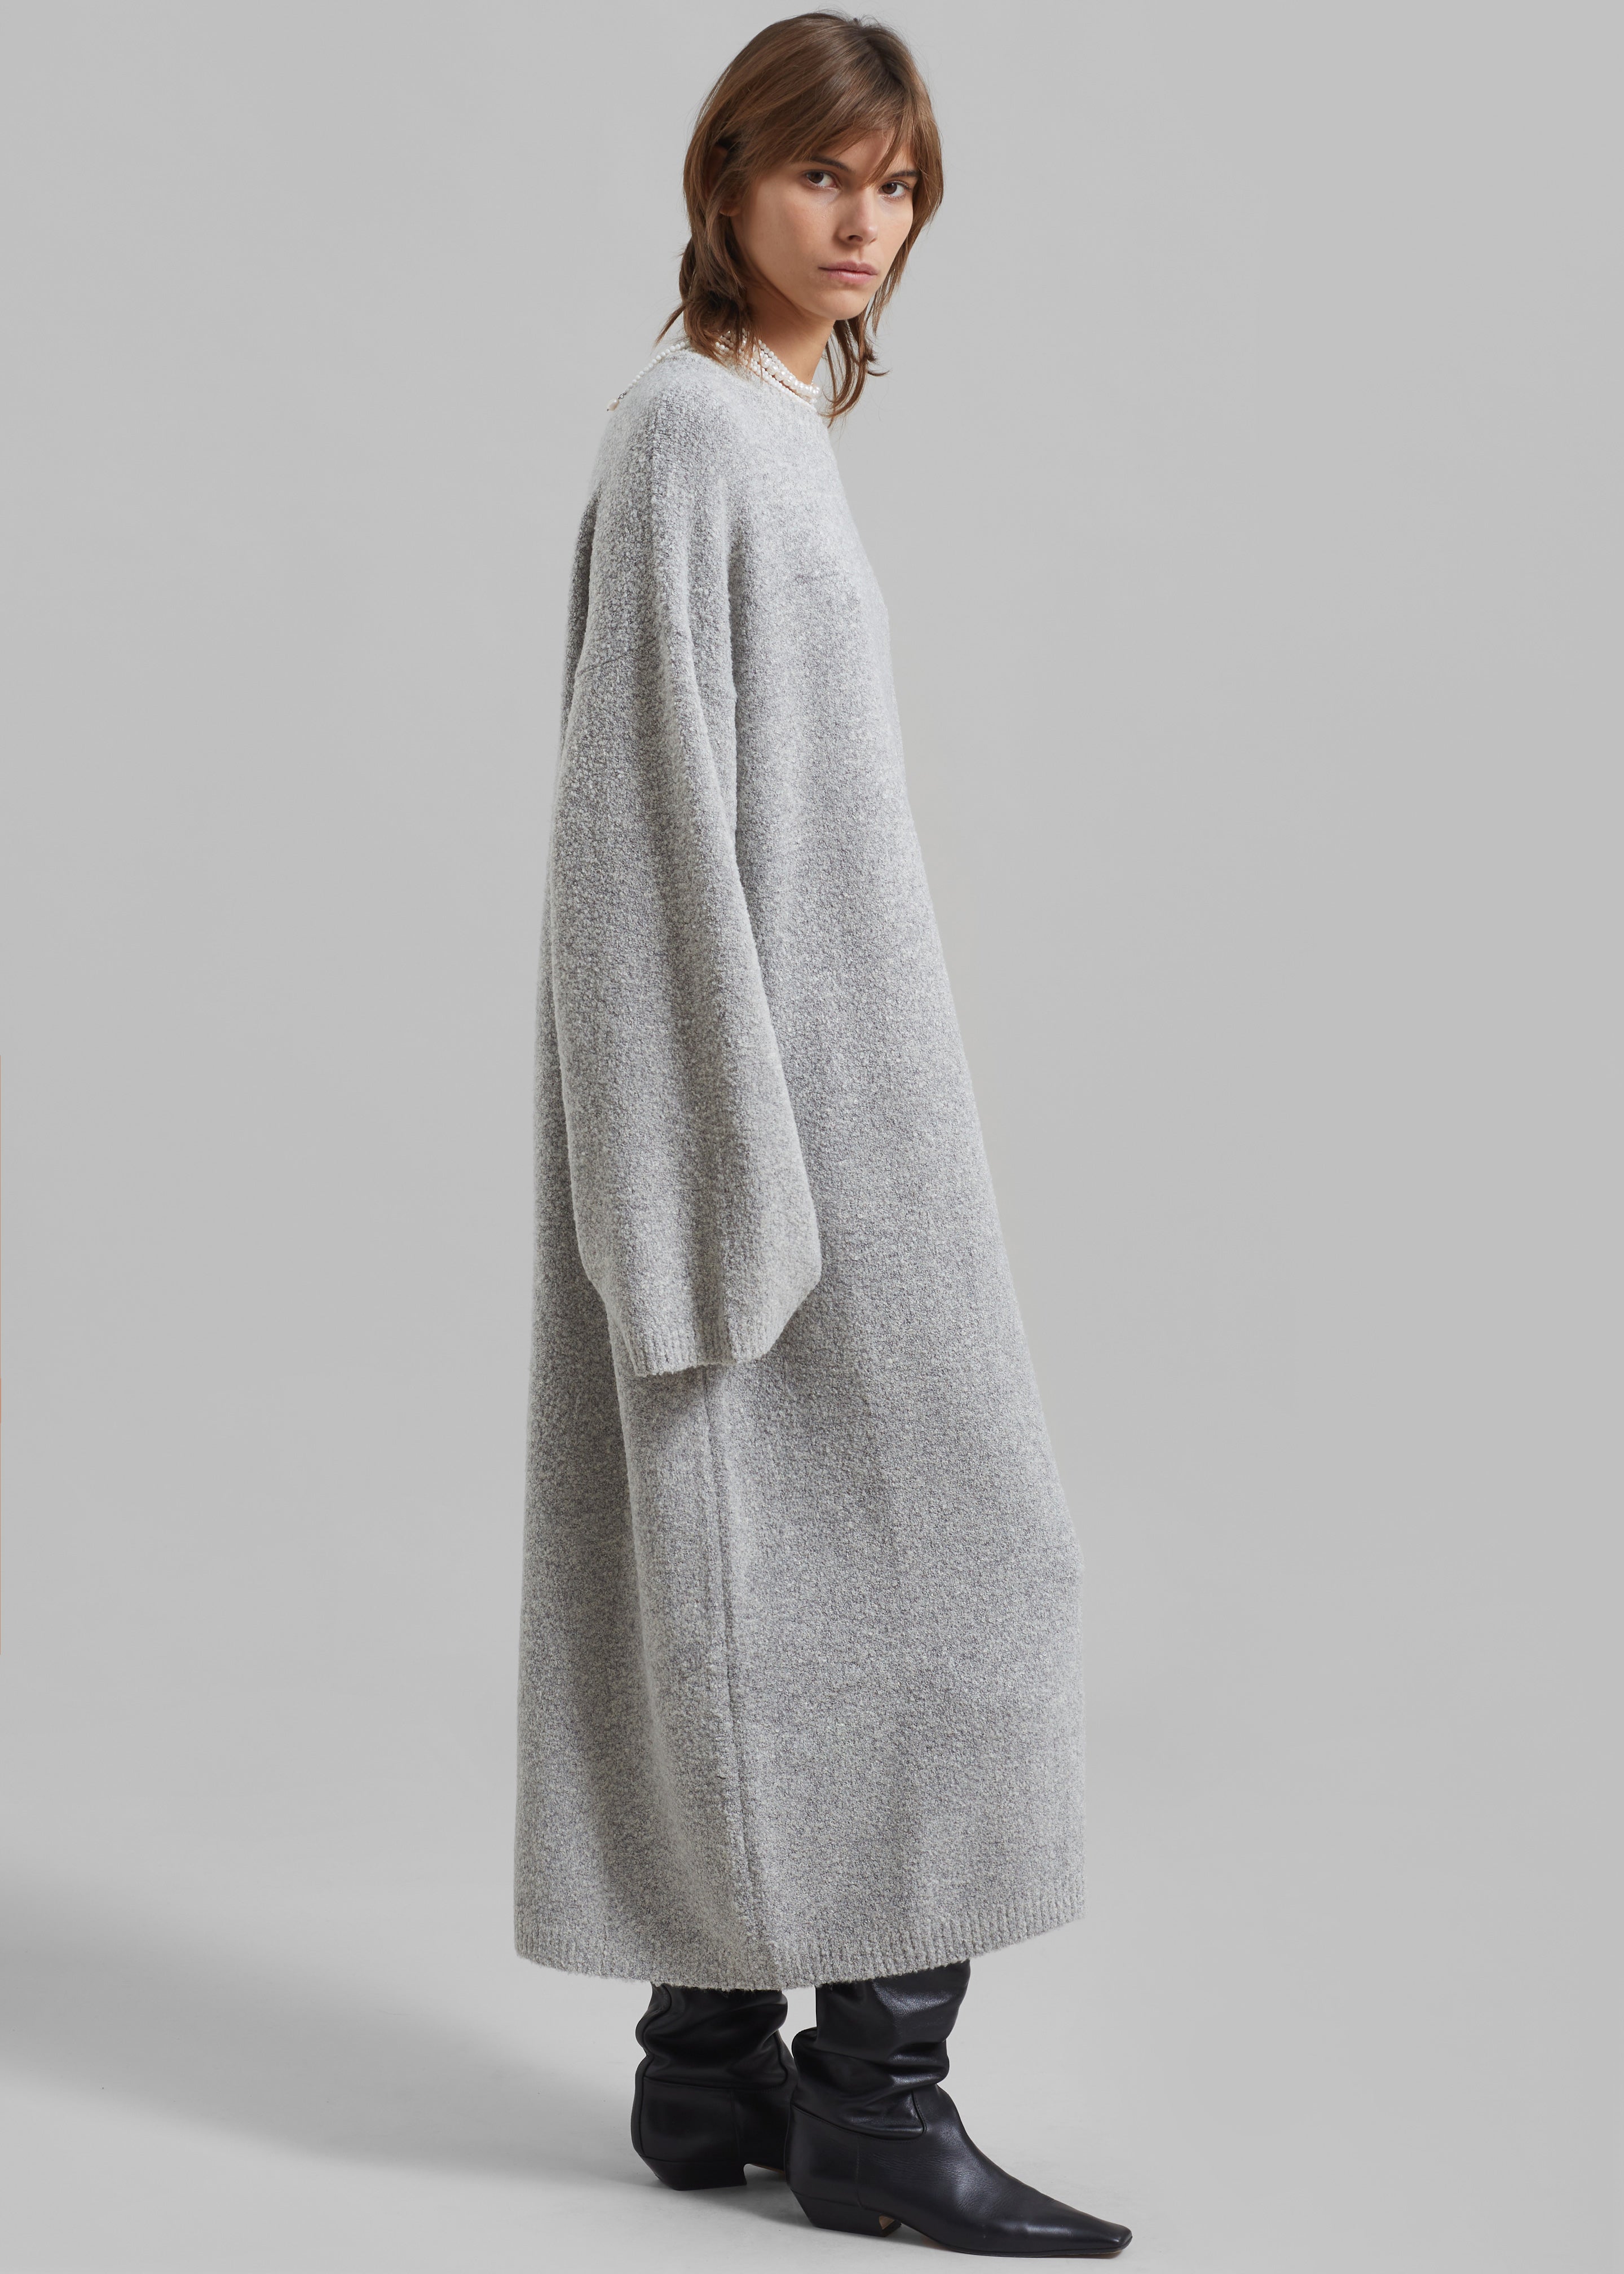 Alba Long Hooded Dress - Grey - 6